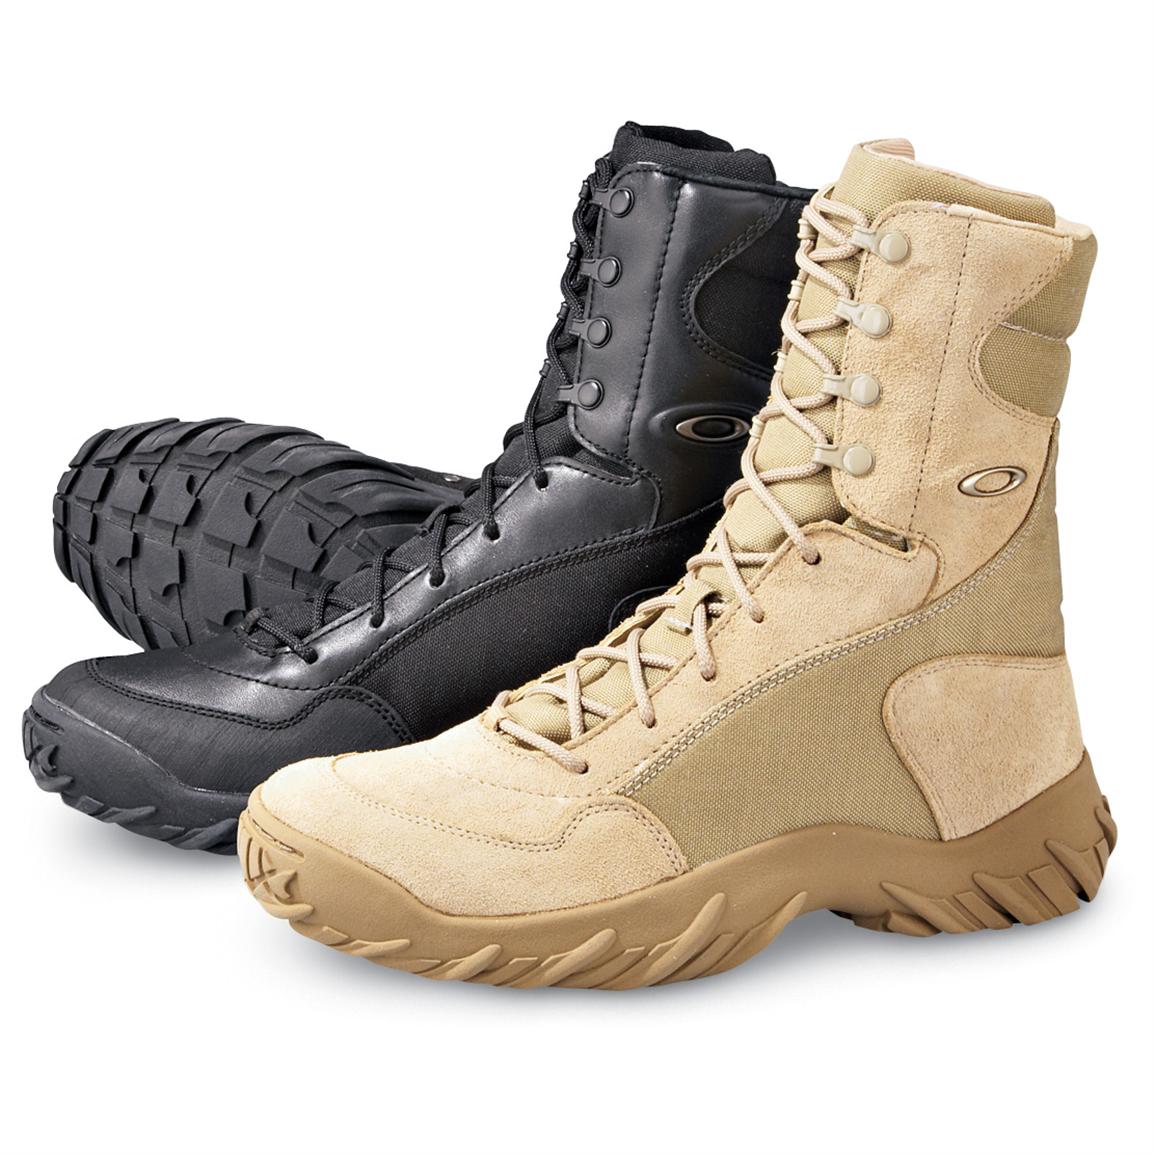 Men S Oakley S I Assault Boots Combat Tactical Boots At Sportsman S Guide